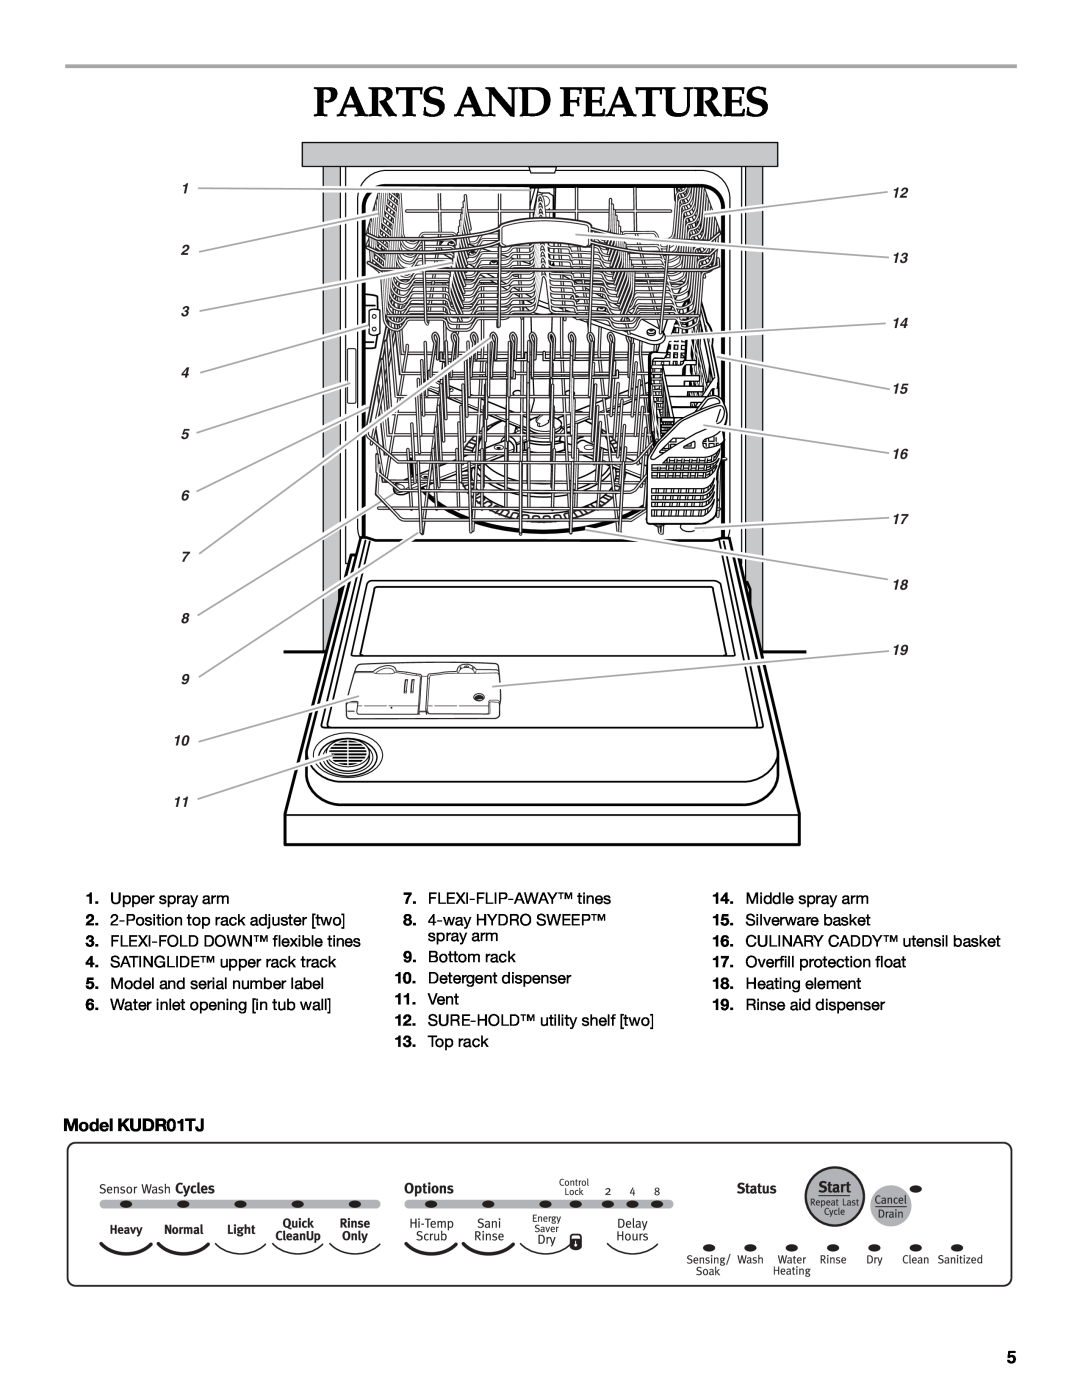 KitchenAid manual Model KUDR01TJ, Parts And Features 